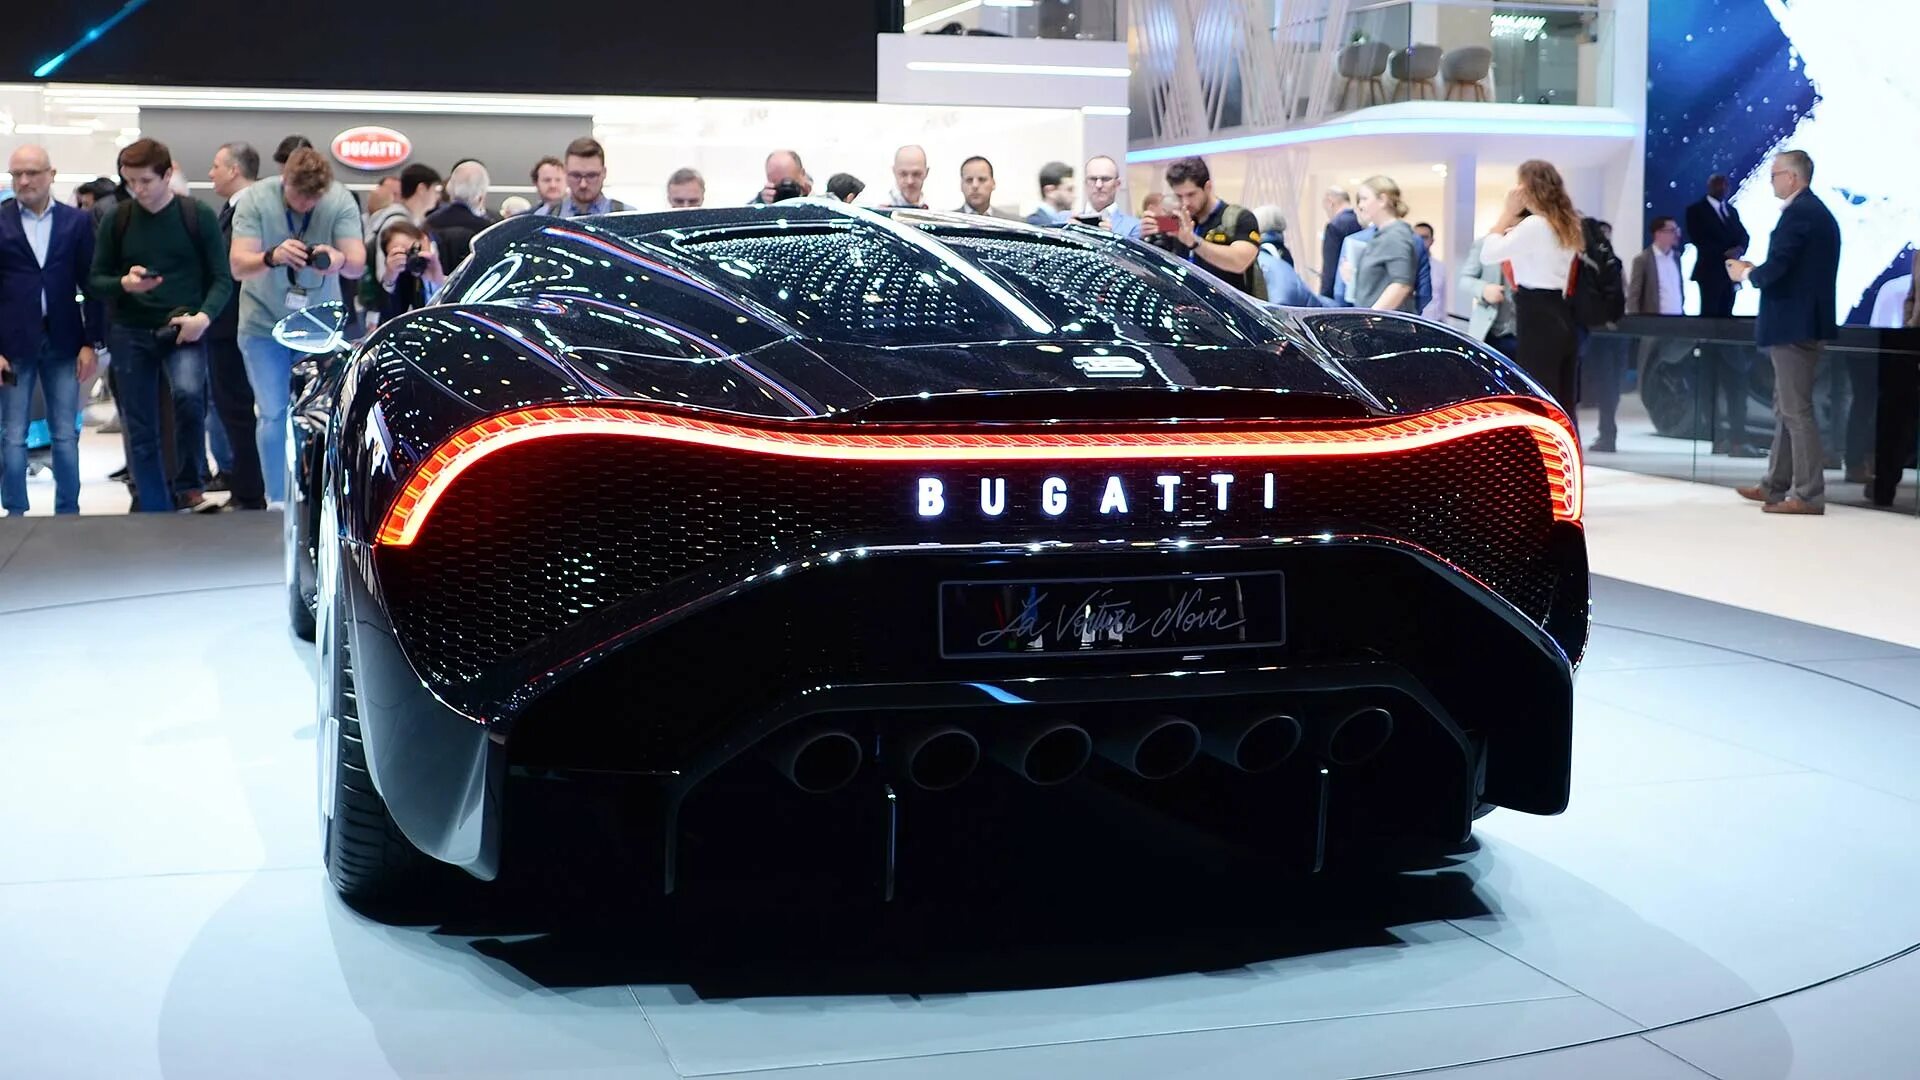 Машина Bugatti la voiture noire. Бугатти la voiture noire 2021. Бугатти 2020 Нойре. Самый дорогой Бугатти в мире 2021. Bugatti la voiture цена